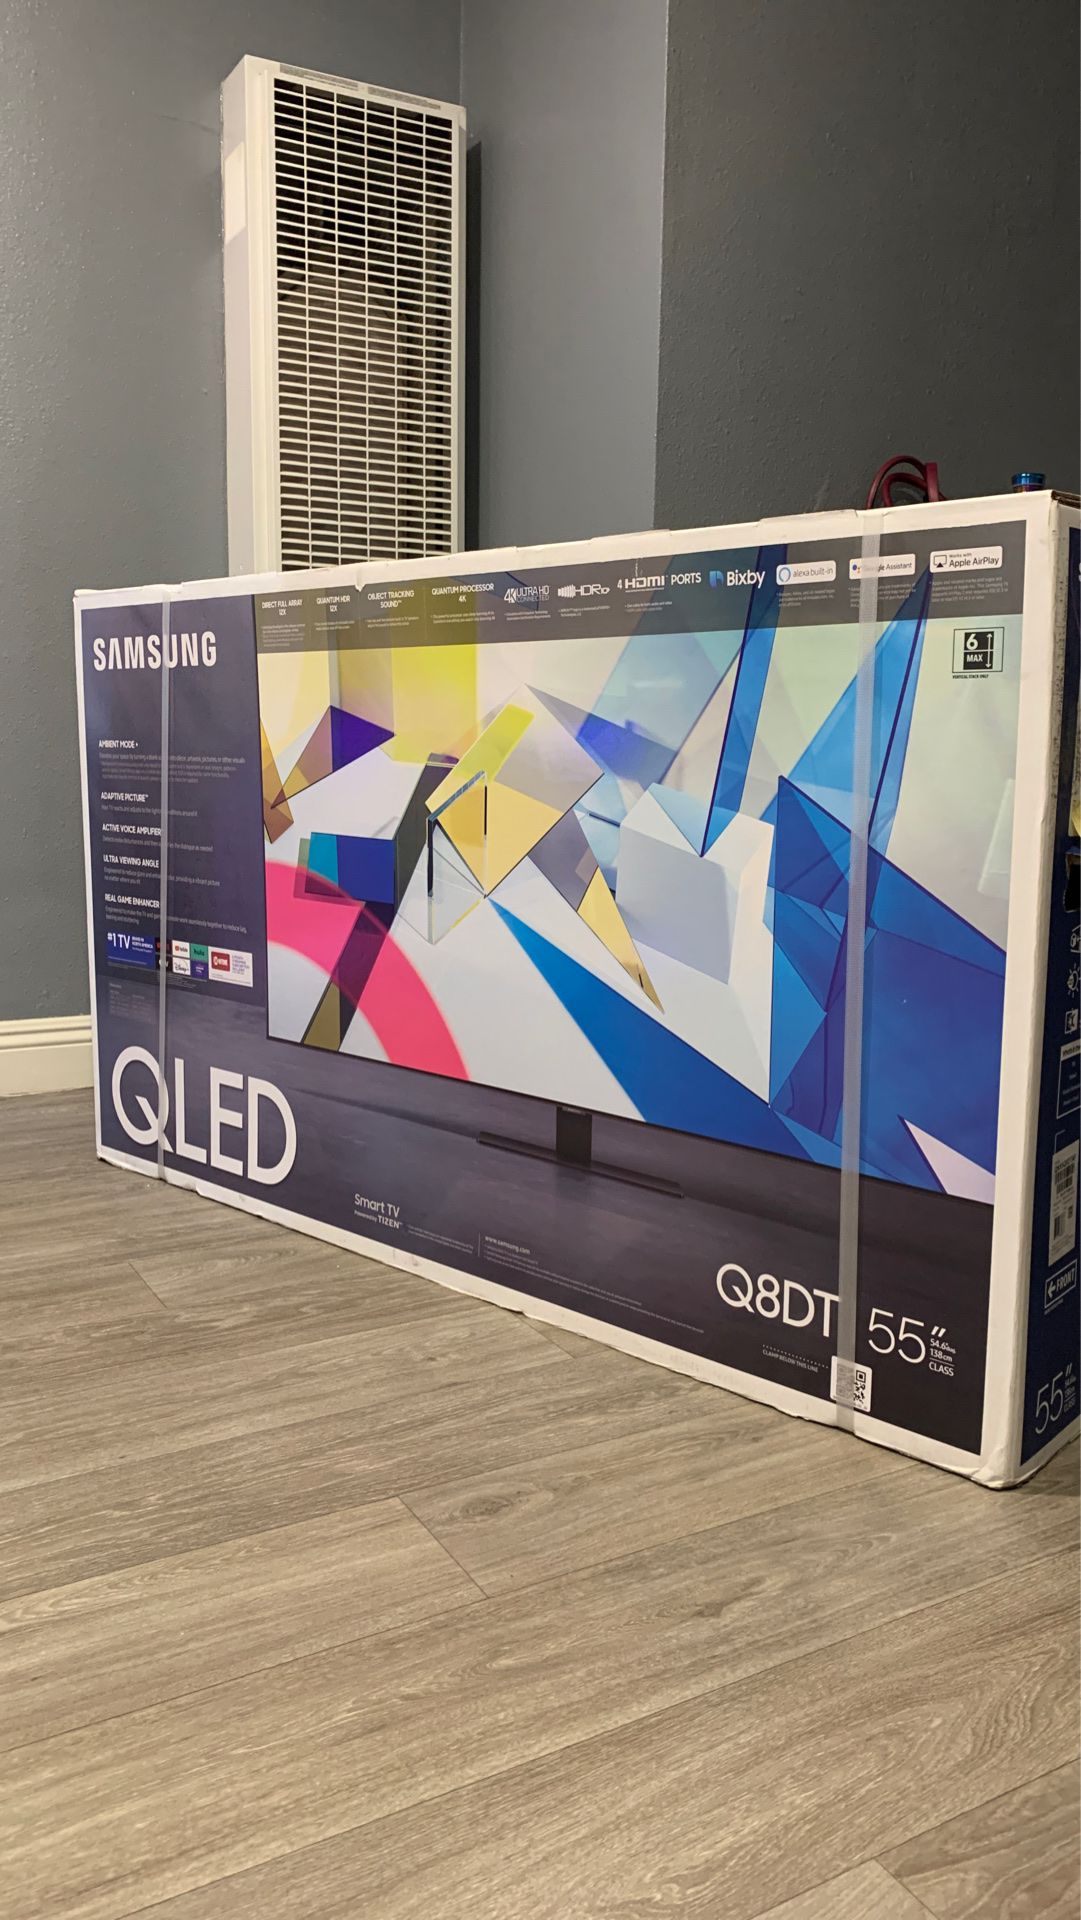 Brand new 55” QLED Samsung TV Q8DT